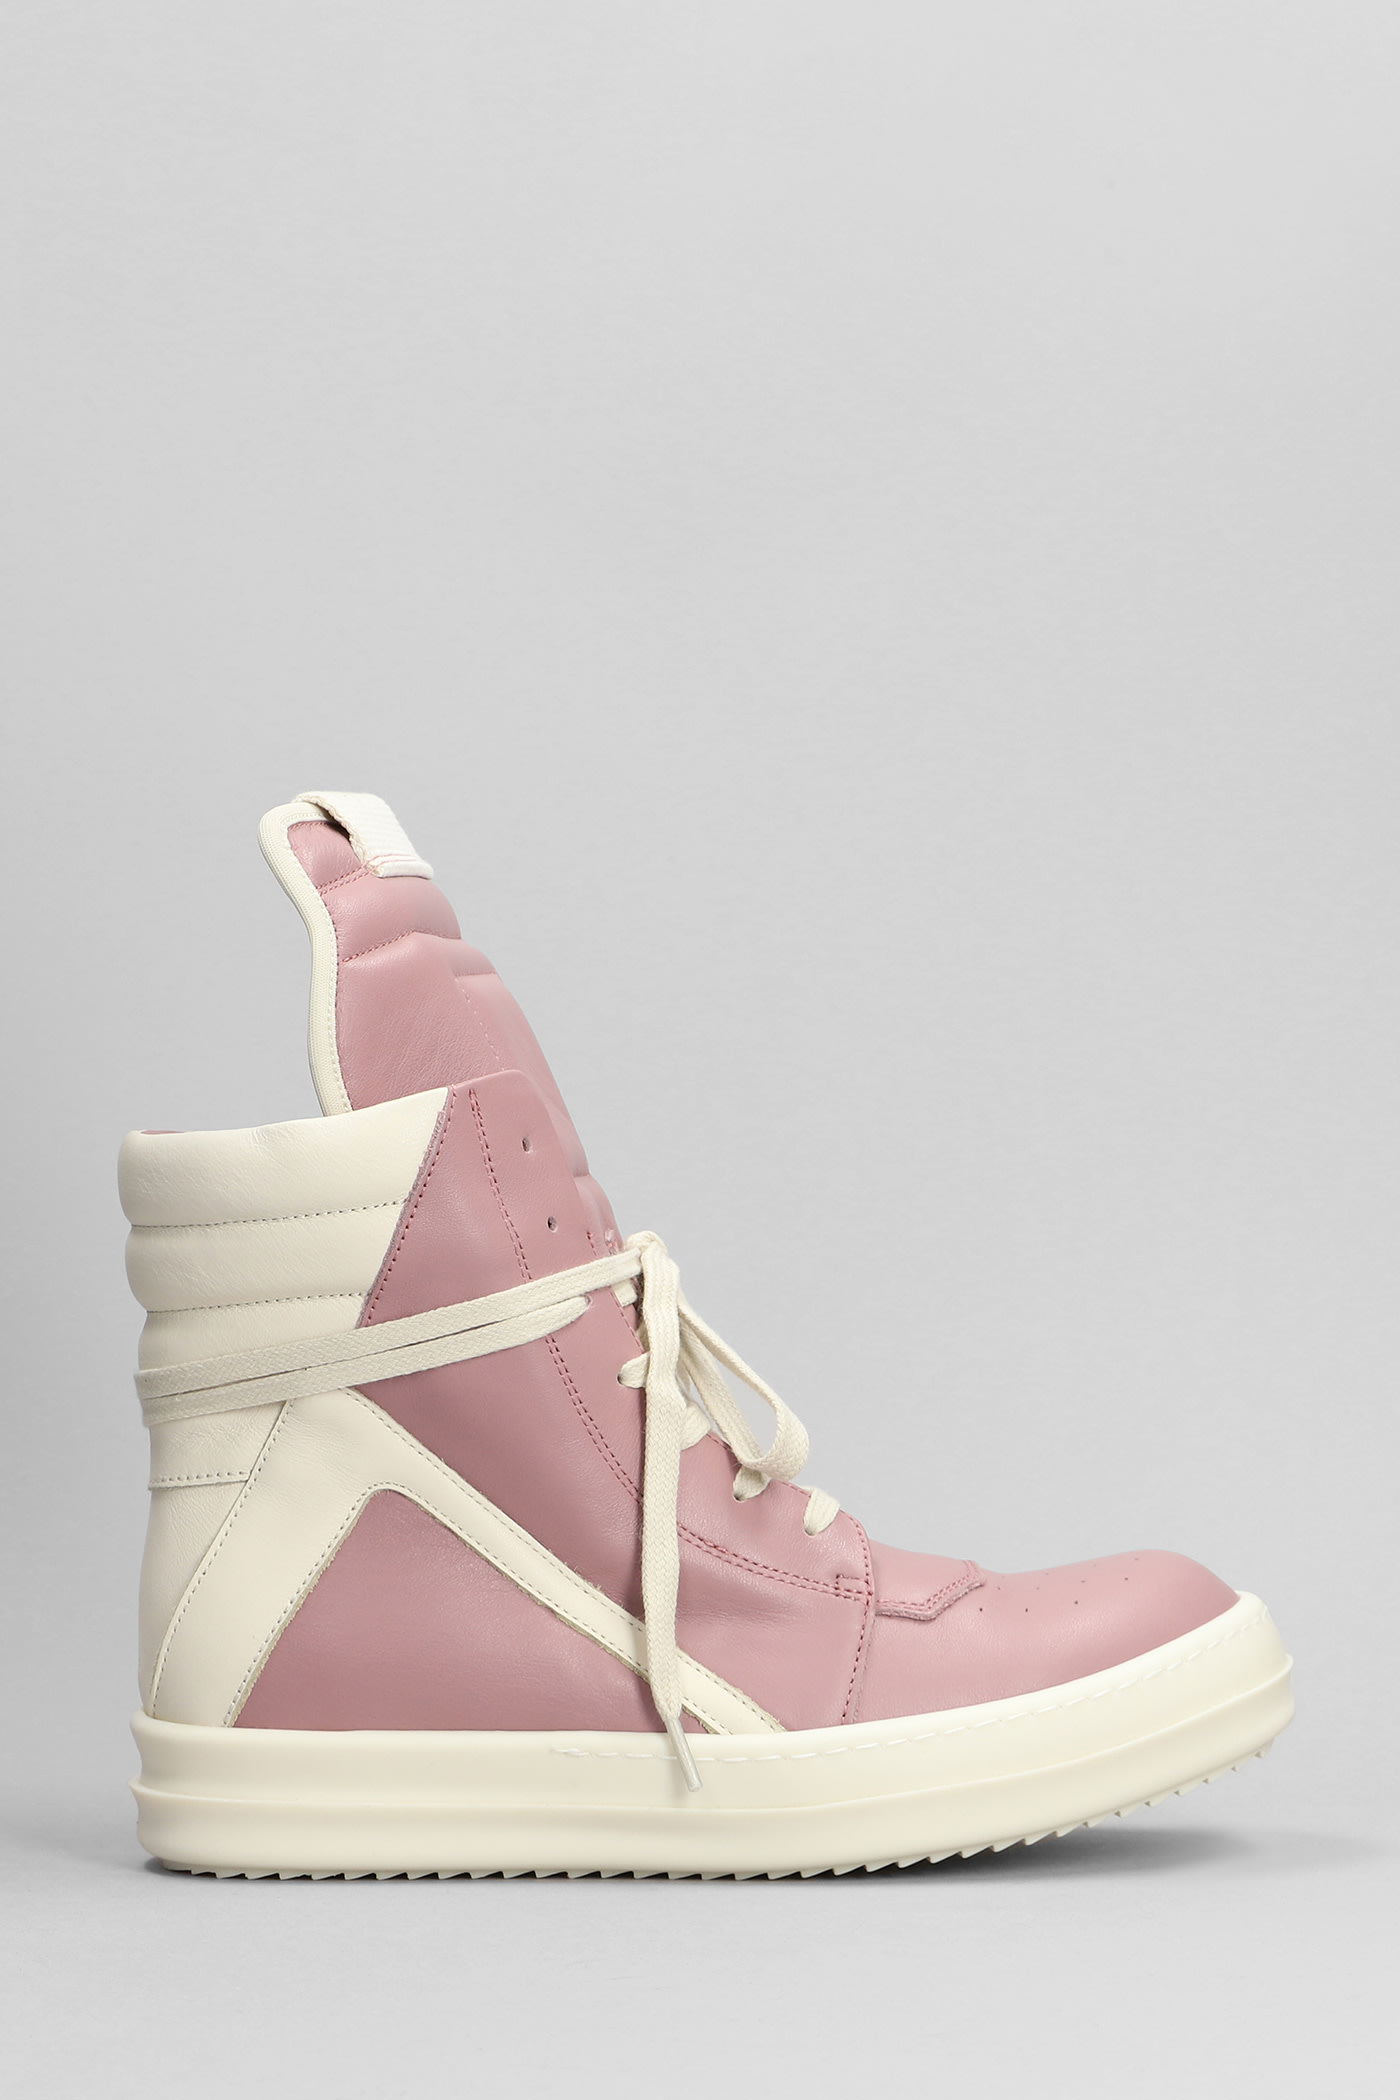 Geobasket Sneakers In Rose-pink Leather